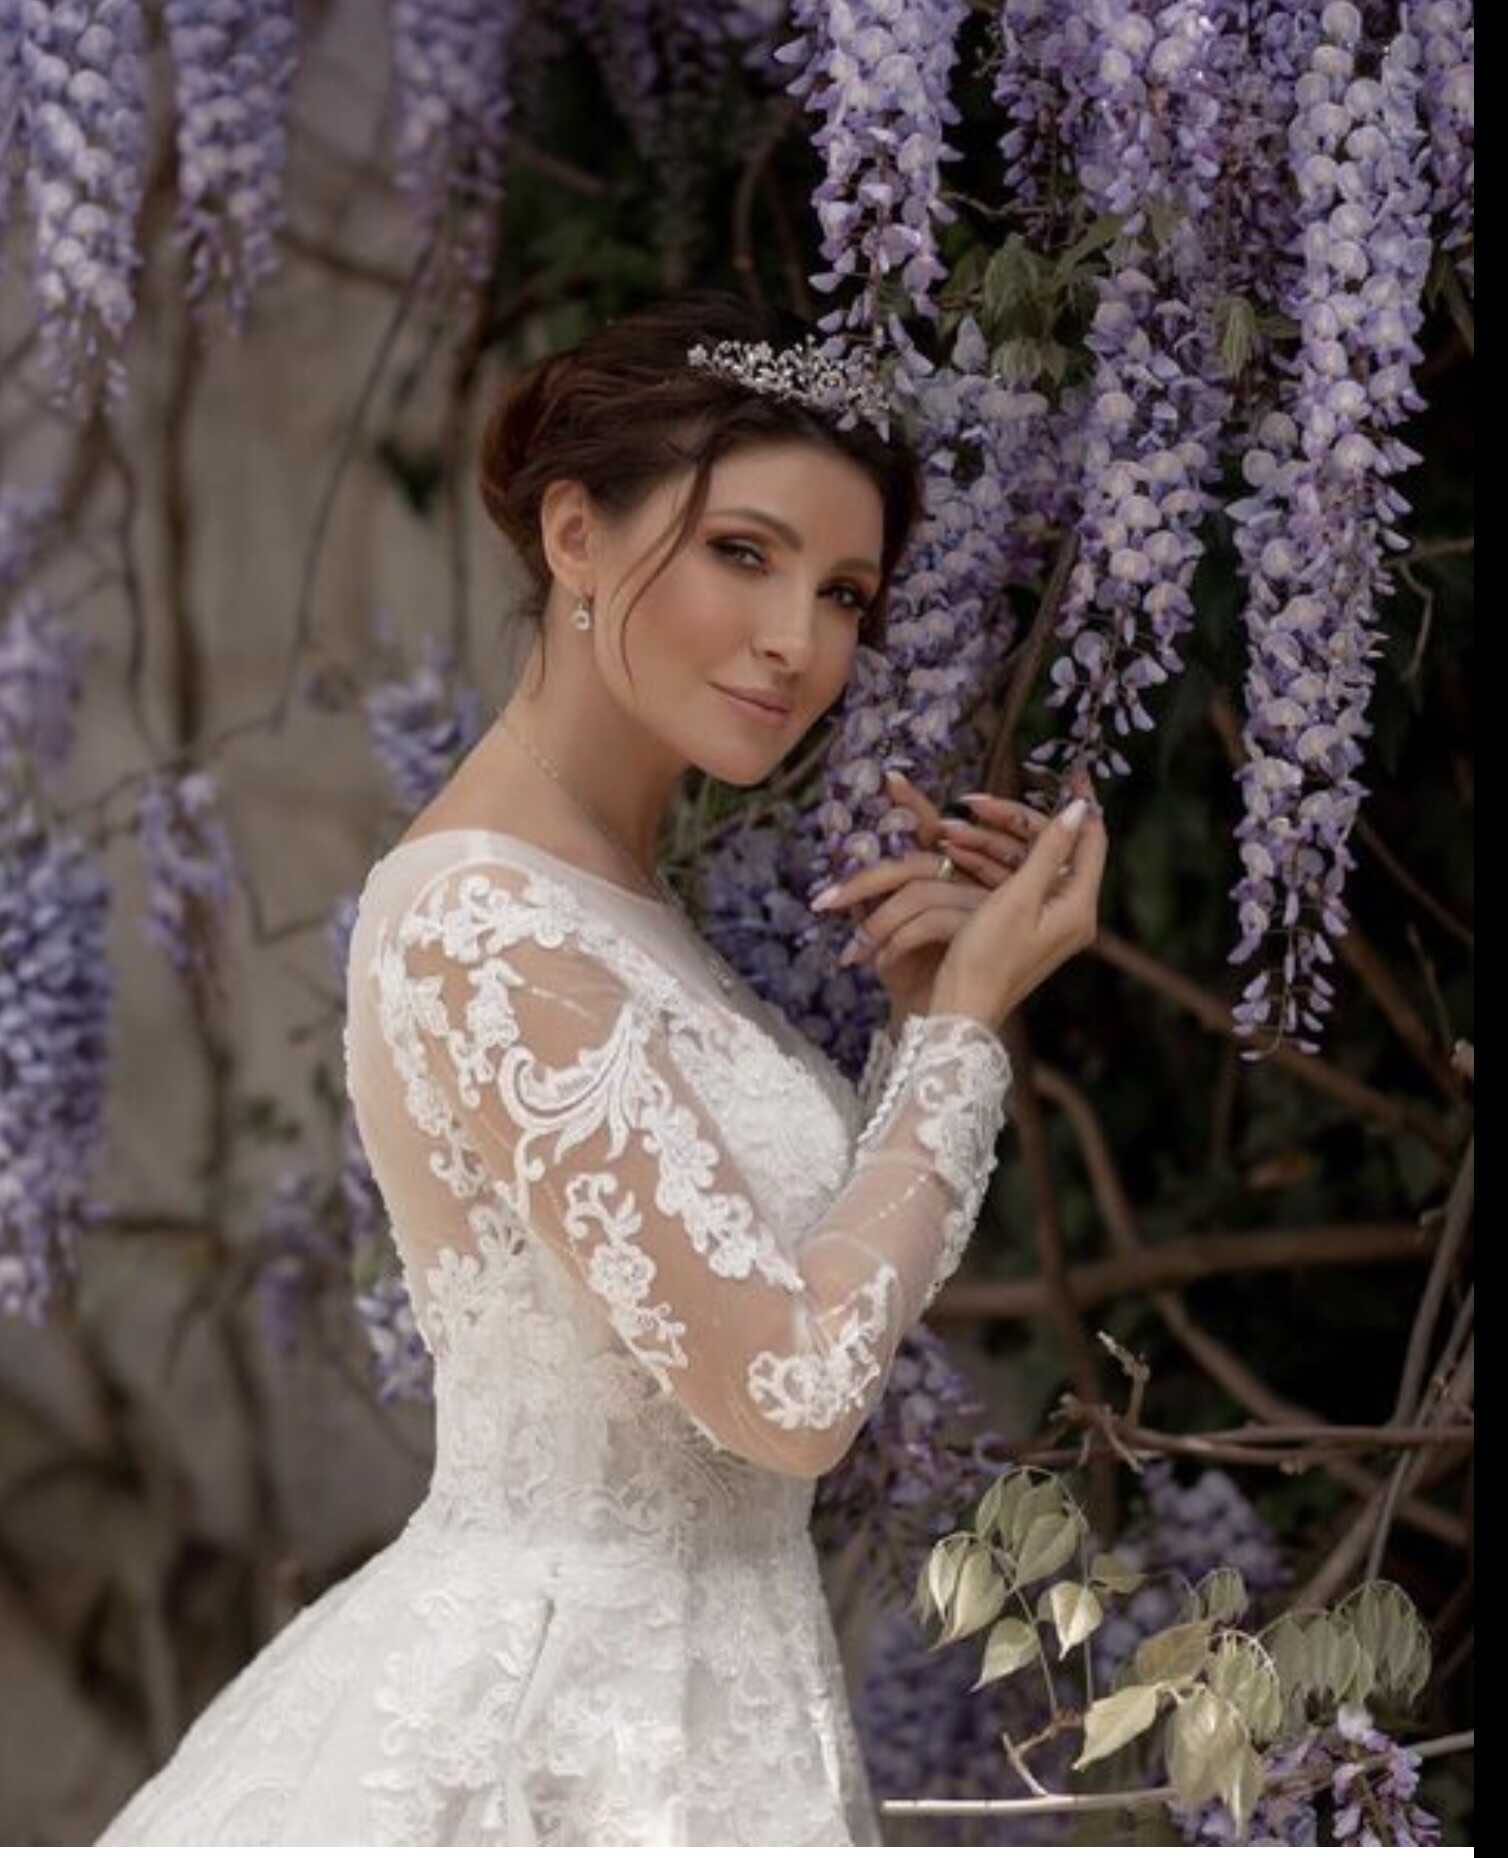 Анастасия Макеева снова вышла замуж. Фото со свадьбы